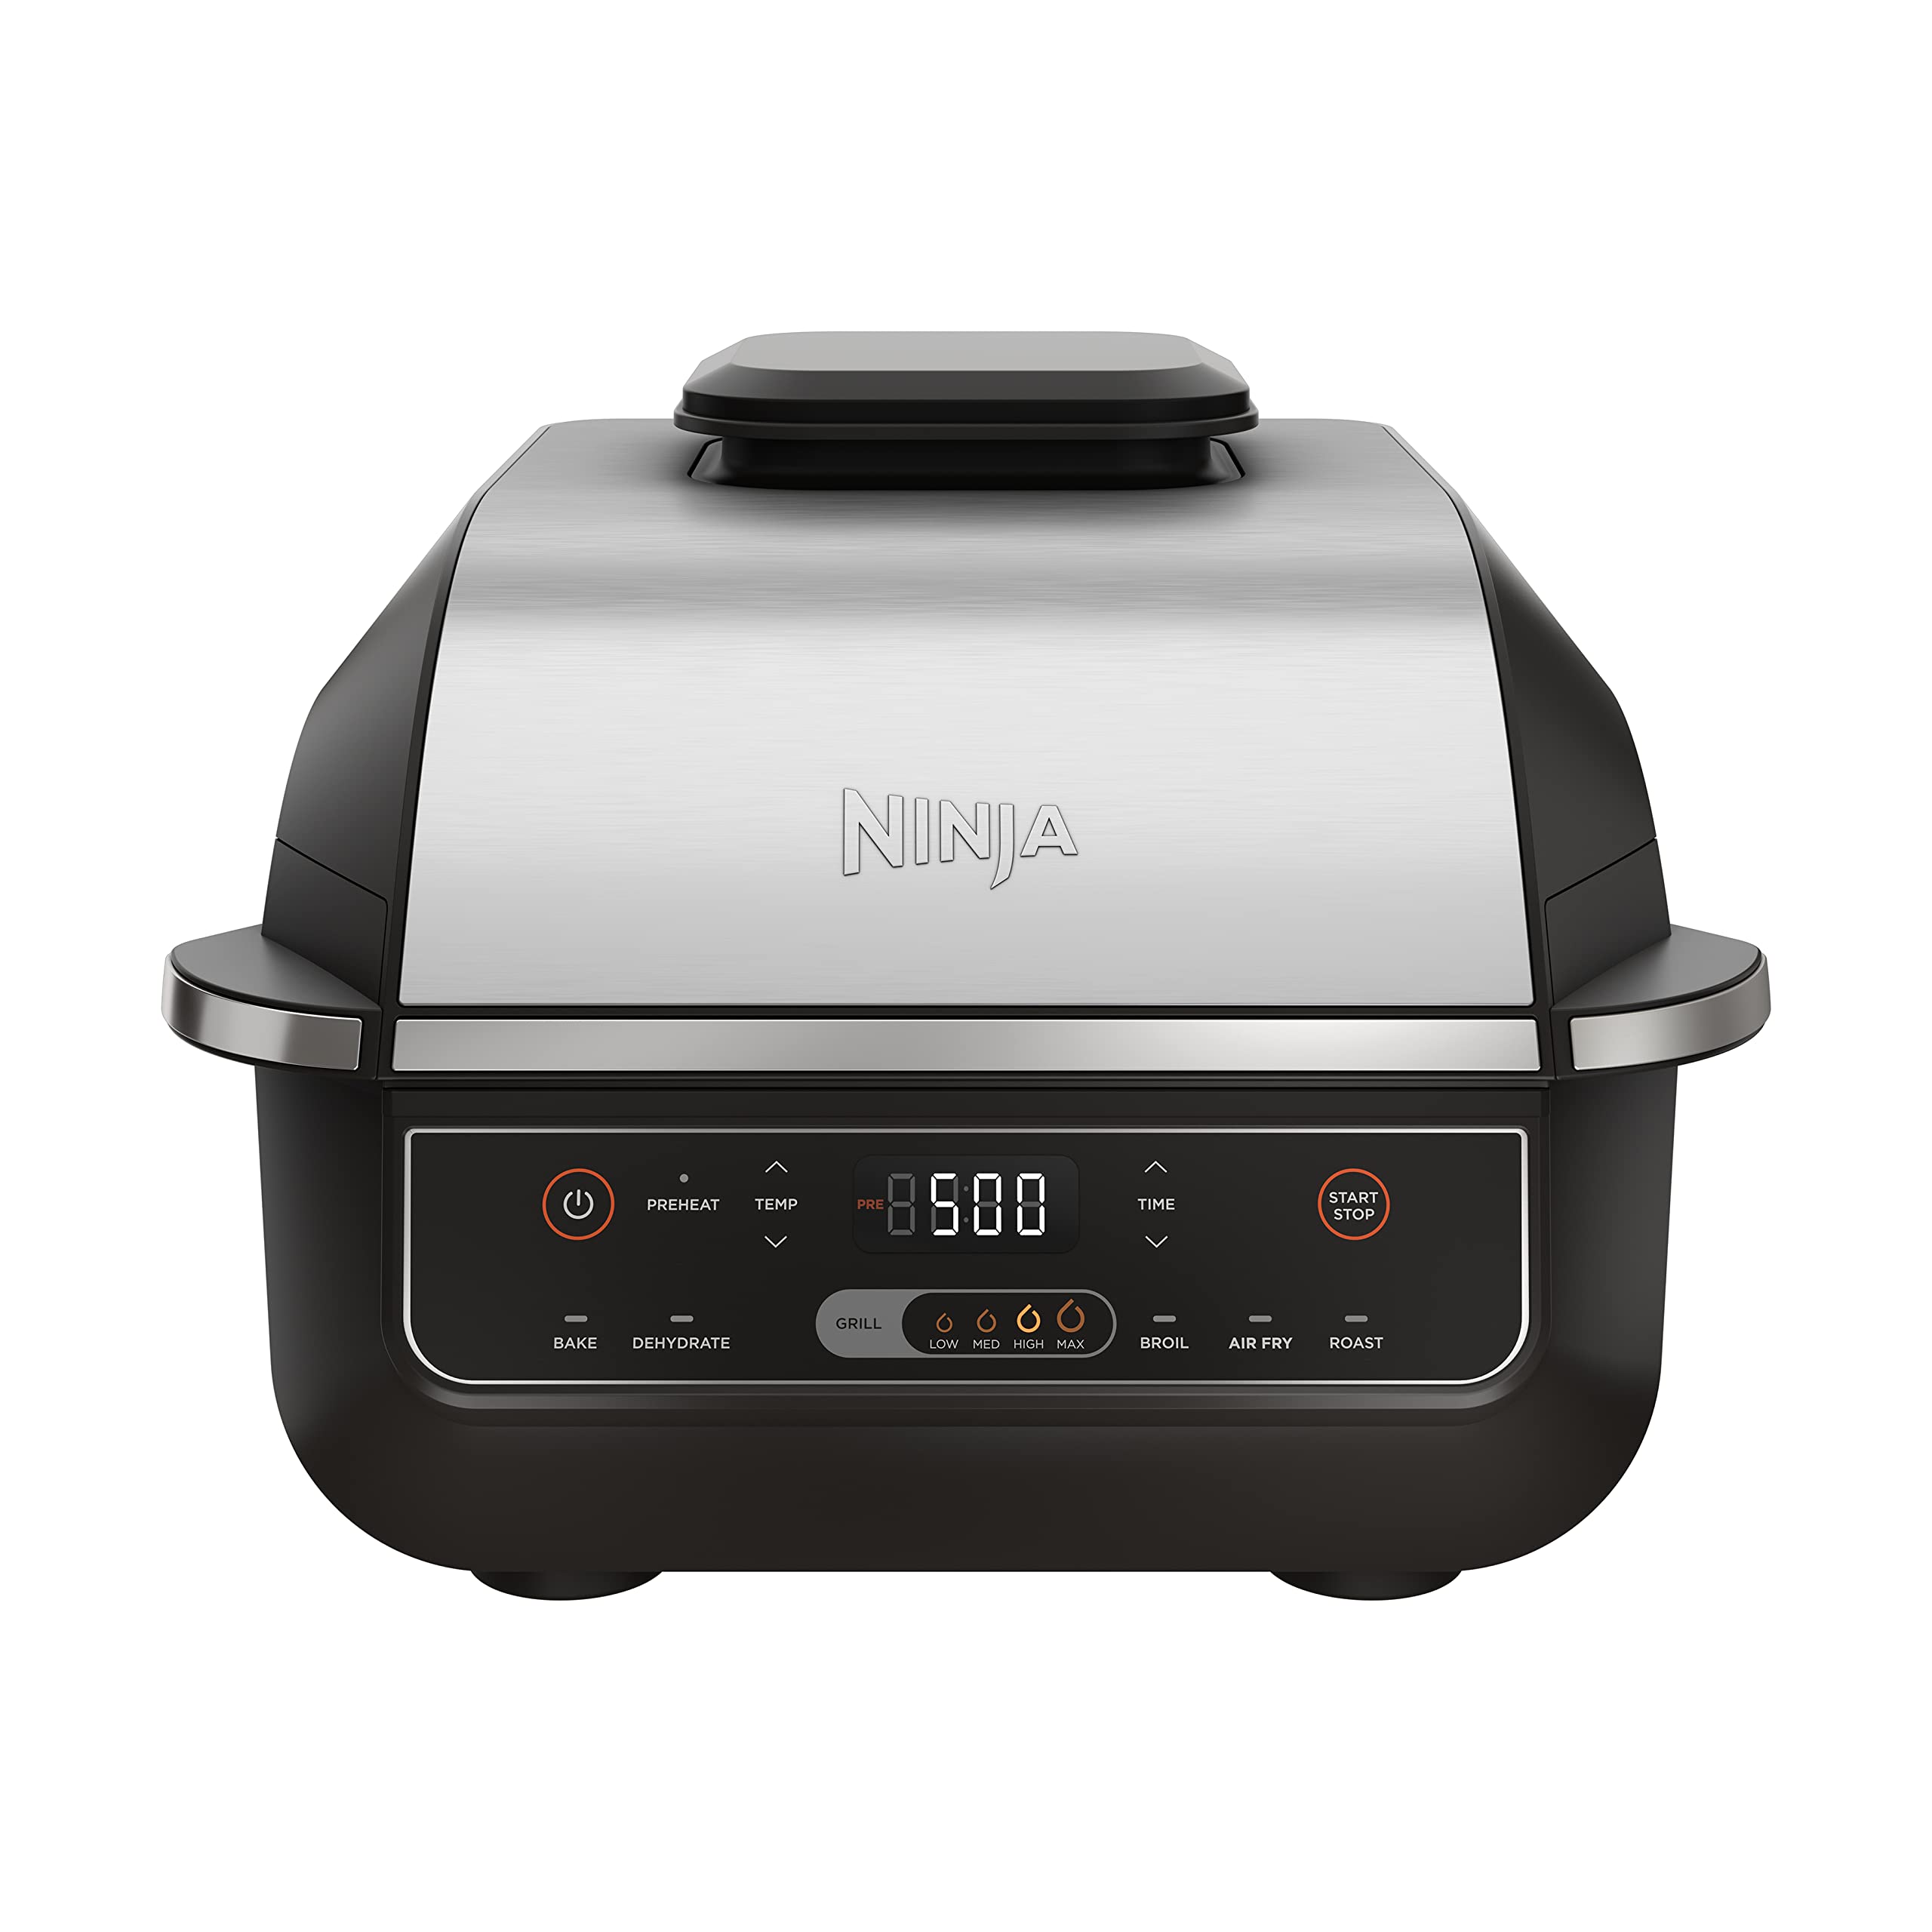 Ninja EG201 Foodi 6 合 1 室内烧烤炉，带空气炸锅、烘烤、烘烤、烧烤和脱水功能，第二代，可...